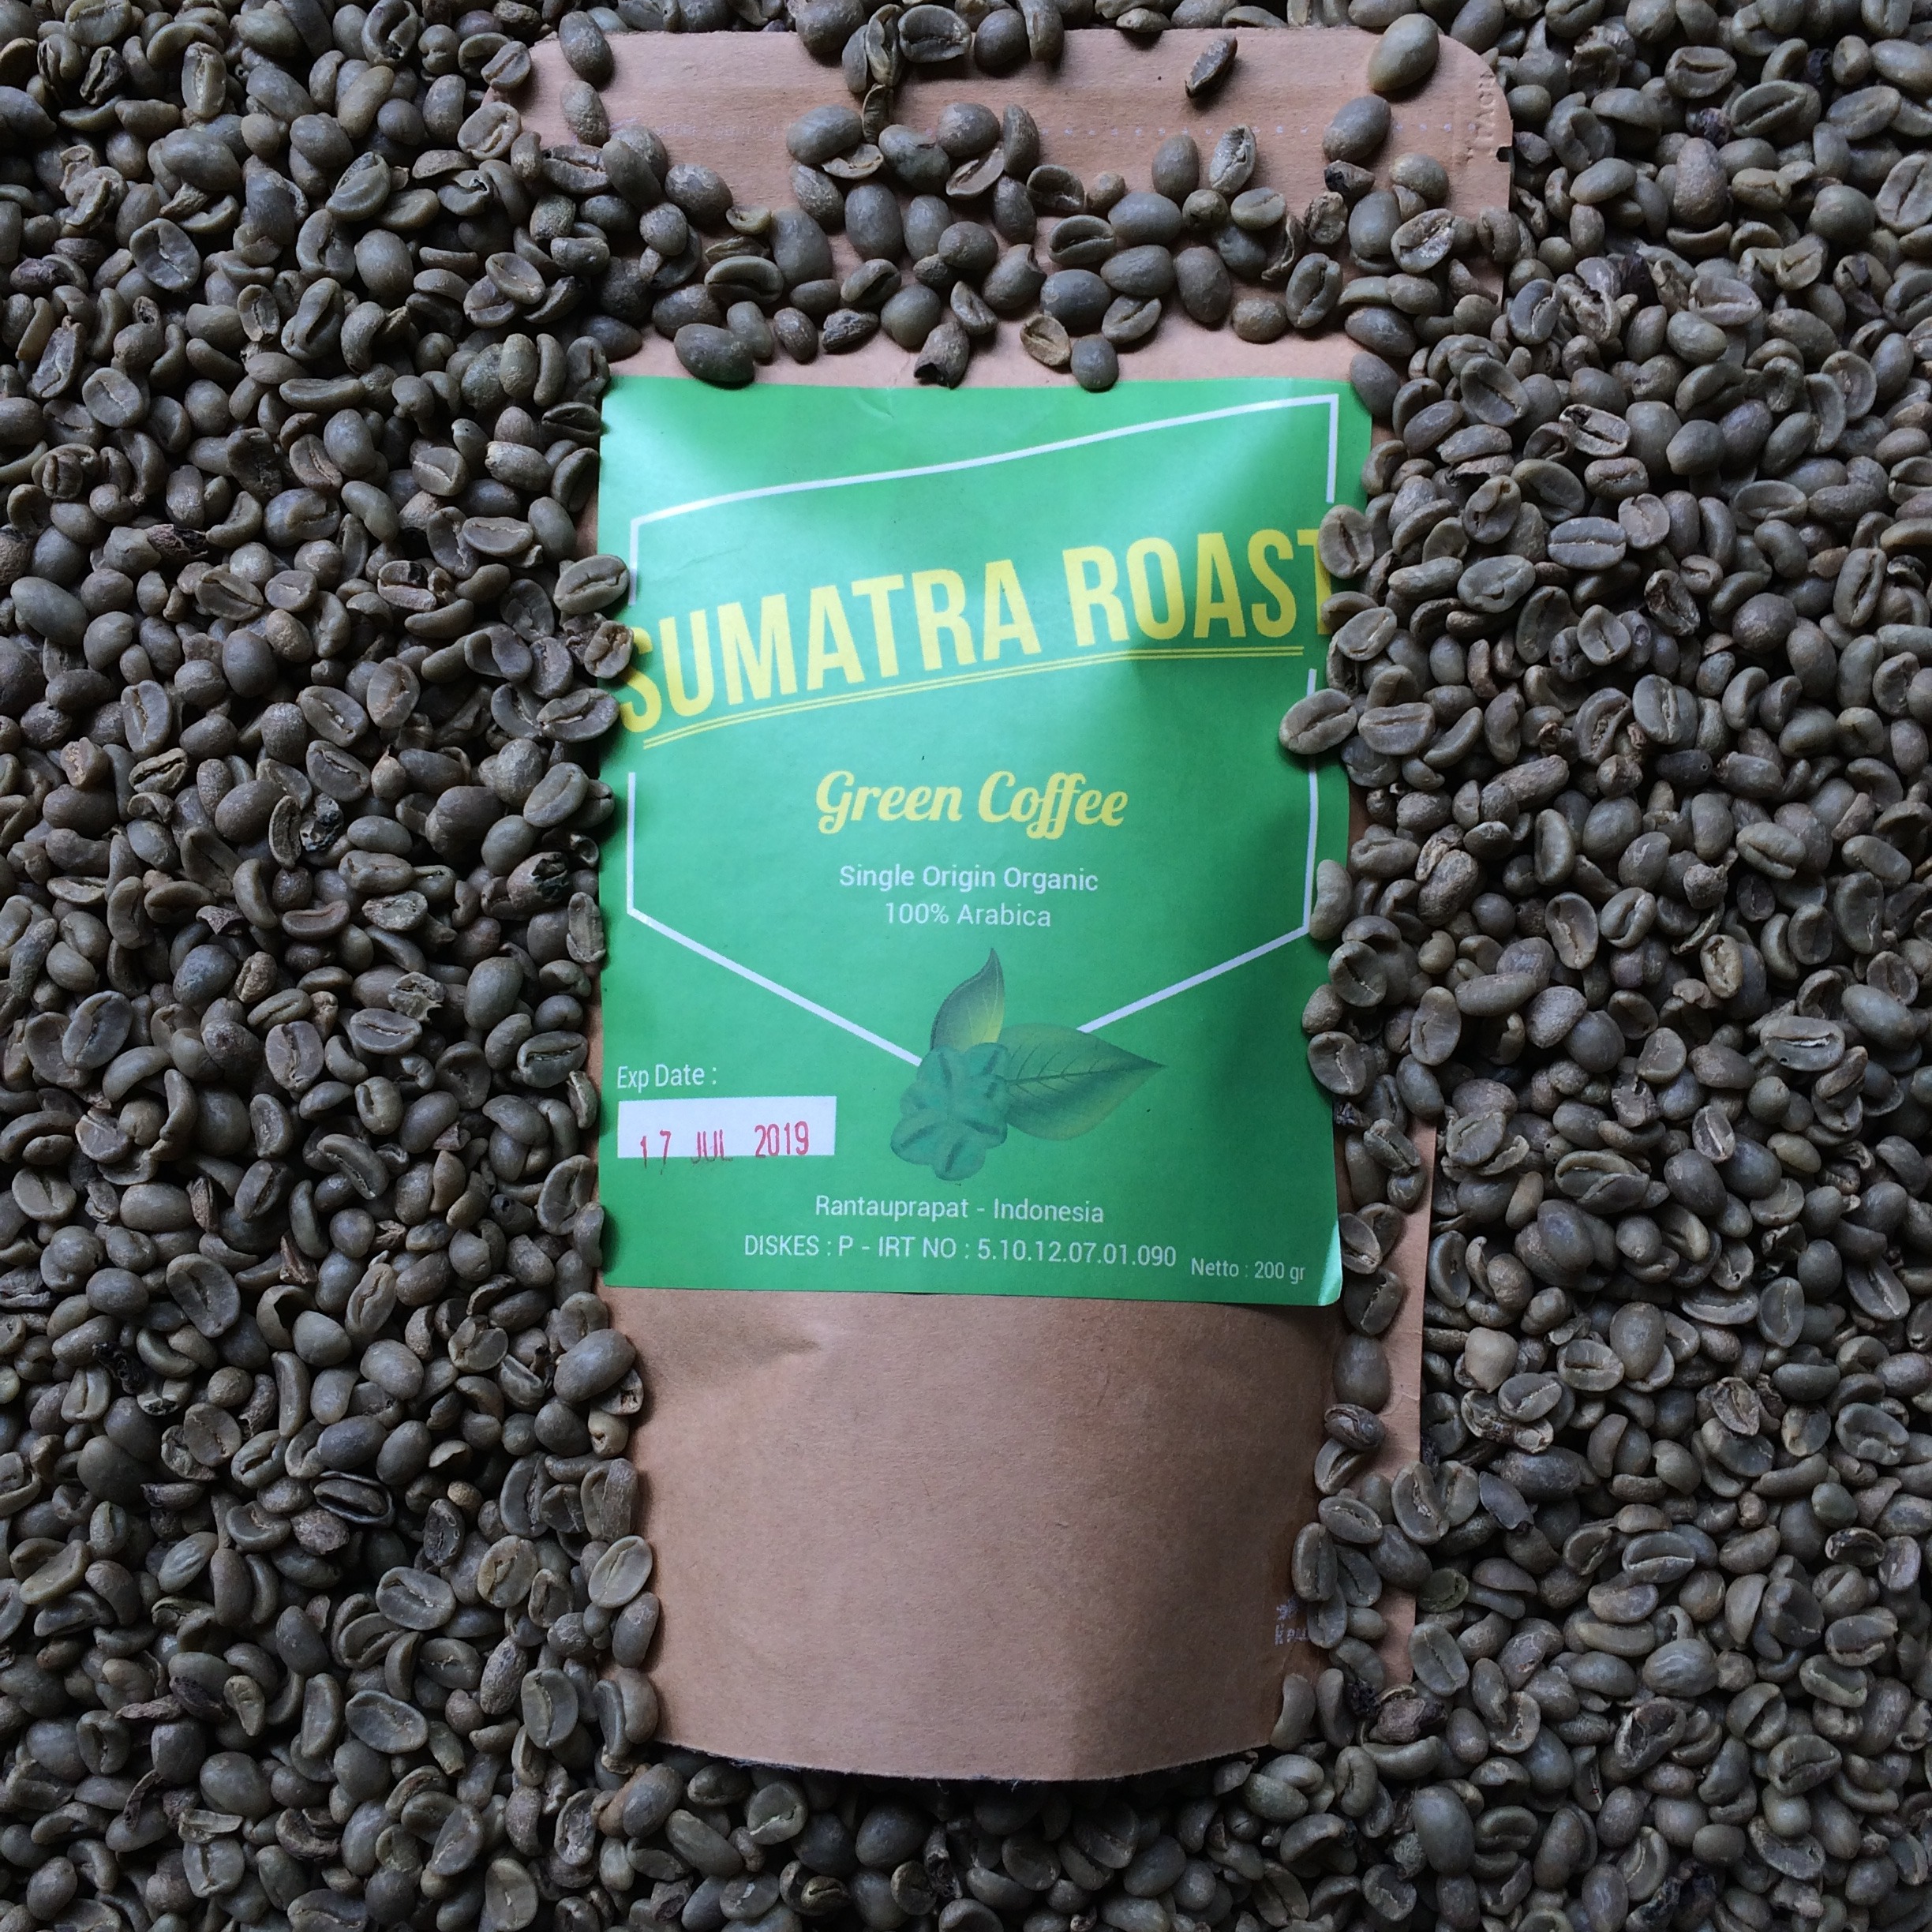 Sumatra Roast